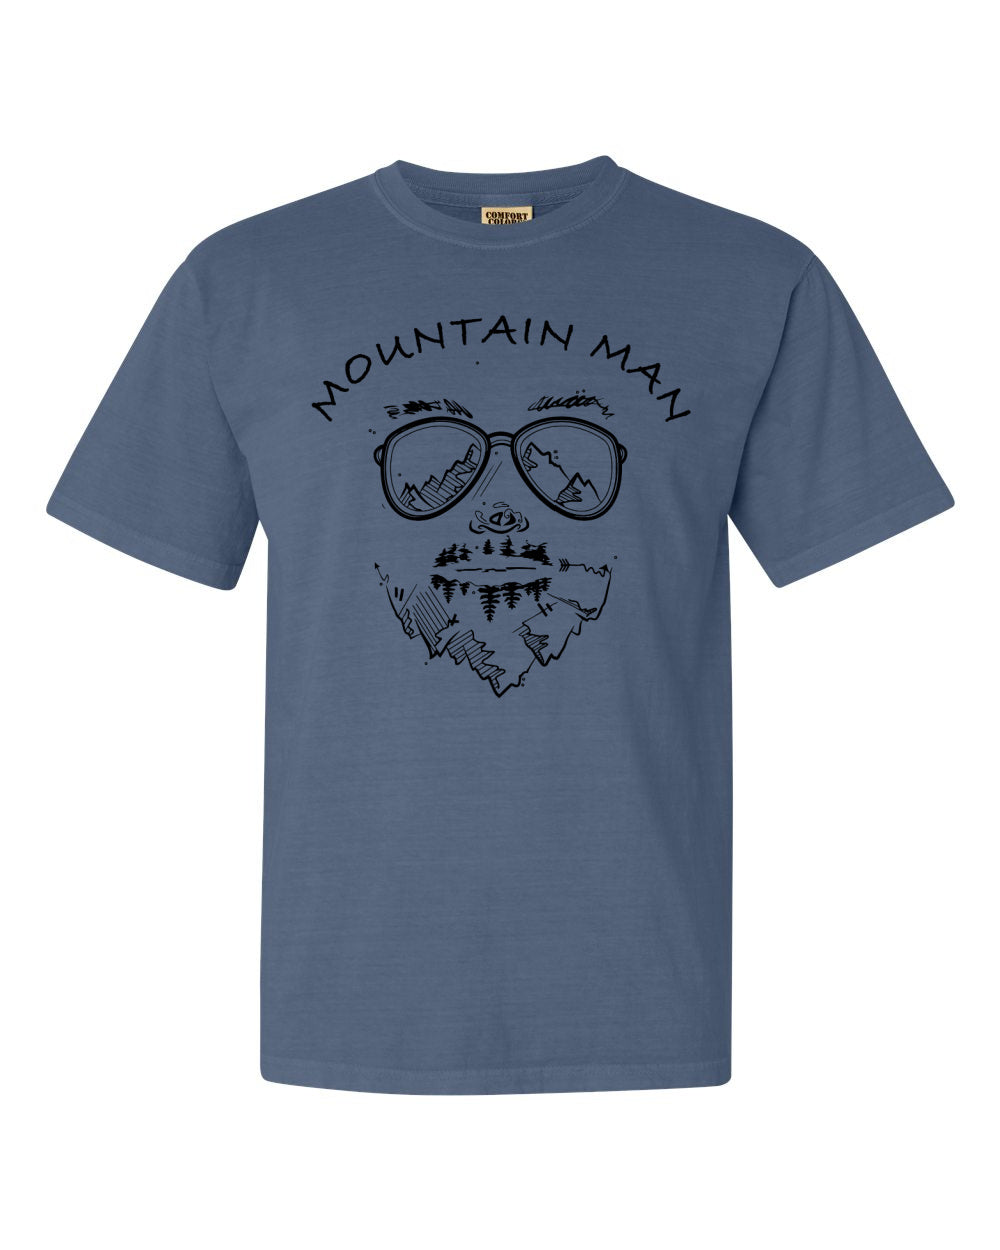 Mountain Man Tee